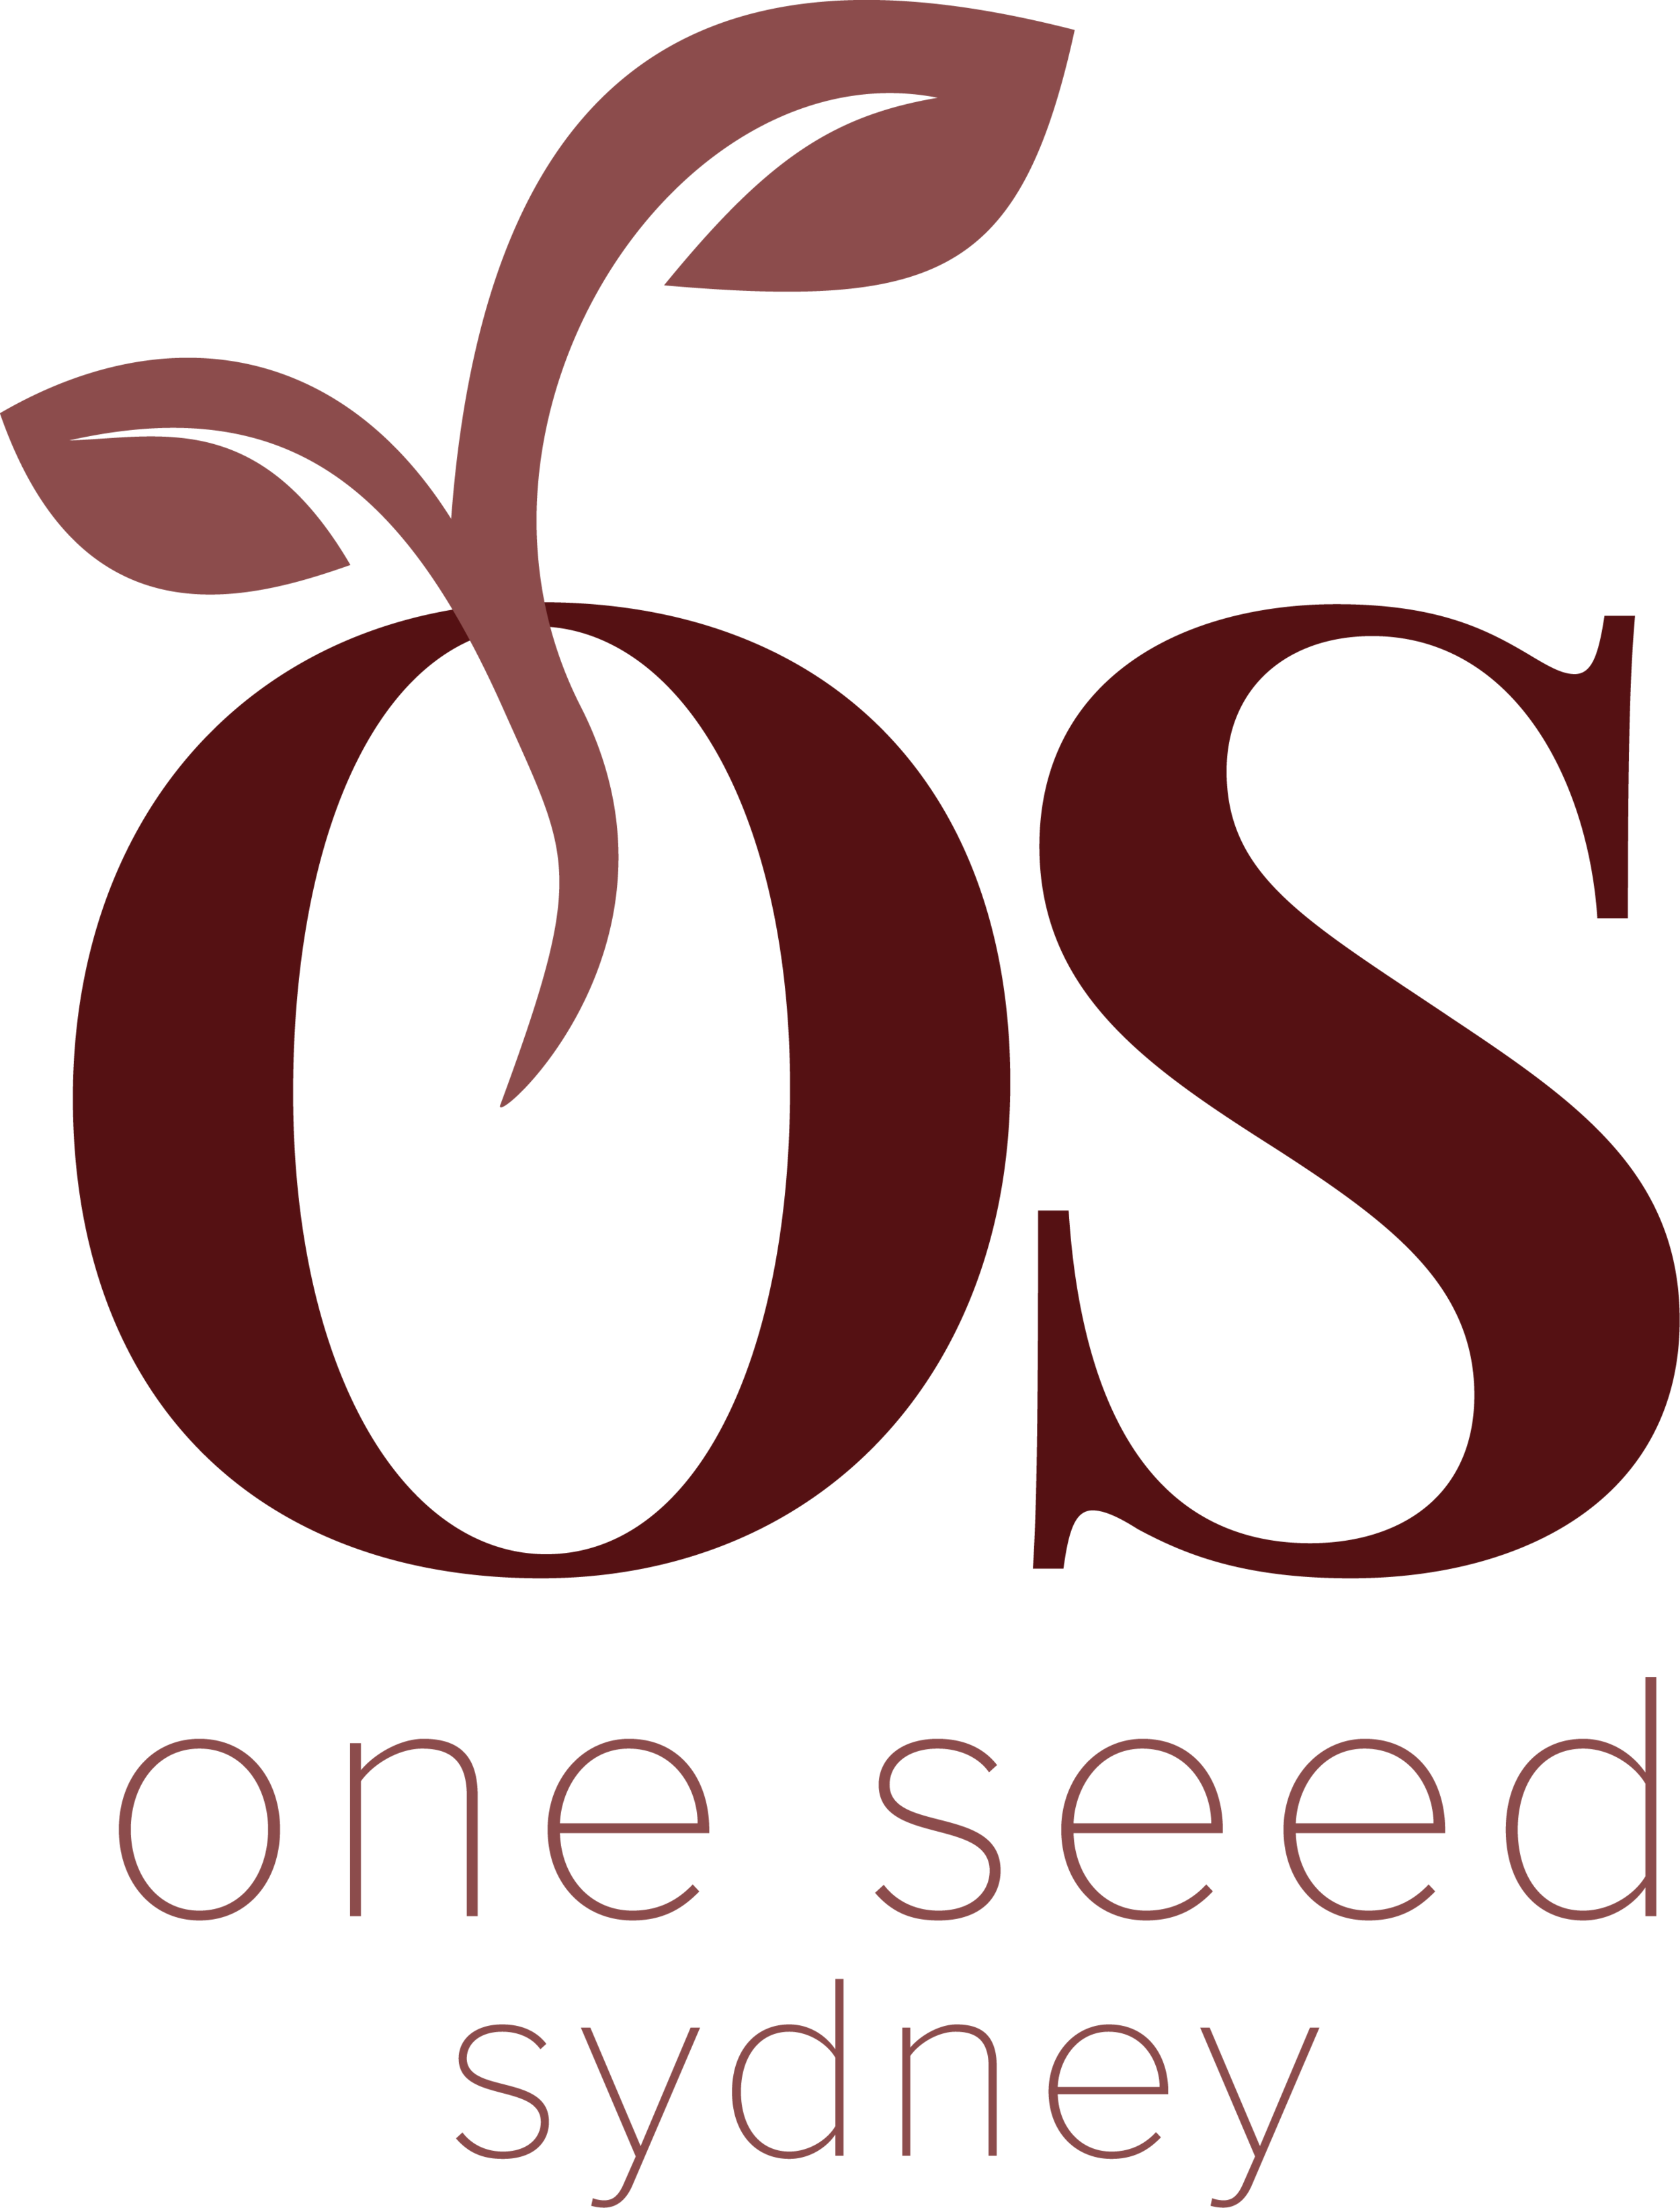 One Seed Sydney